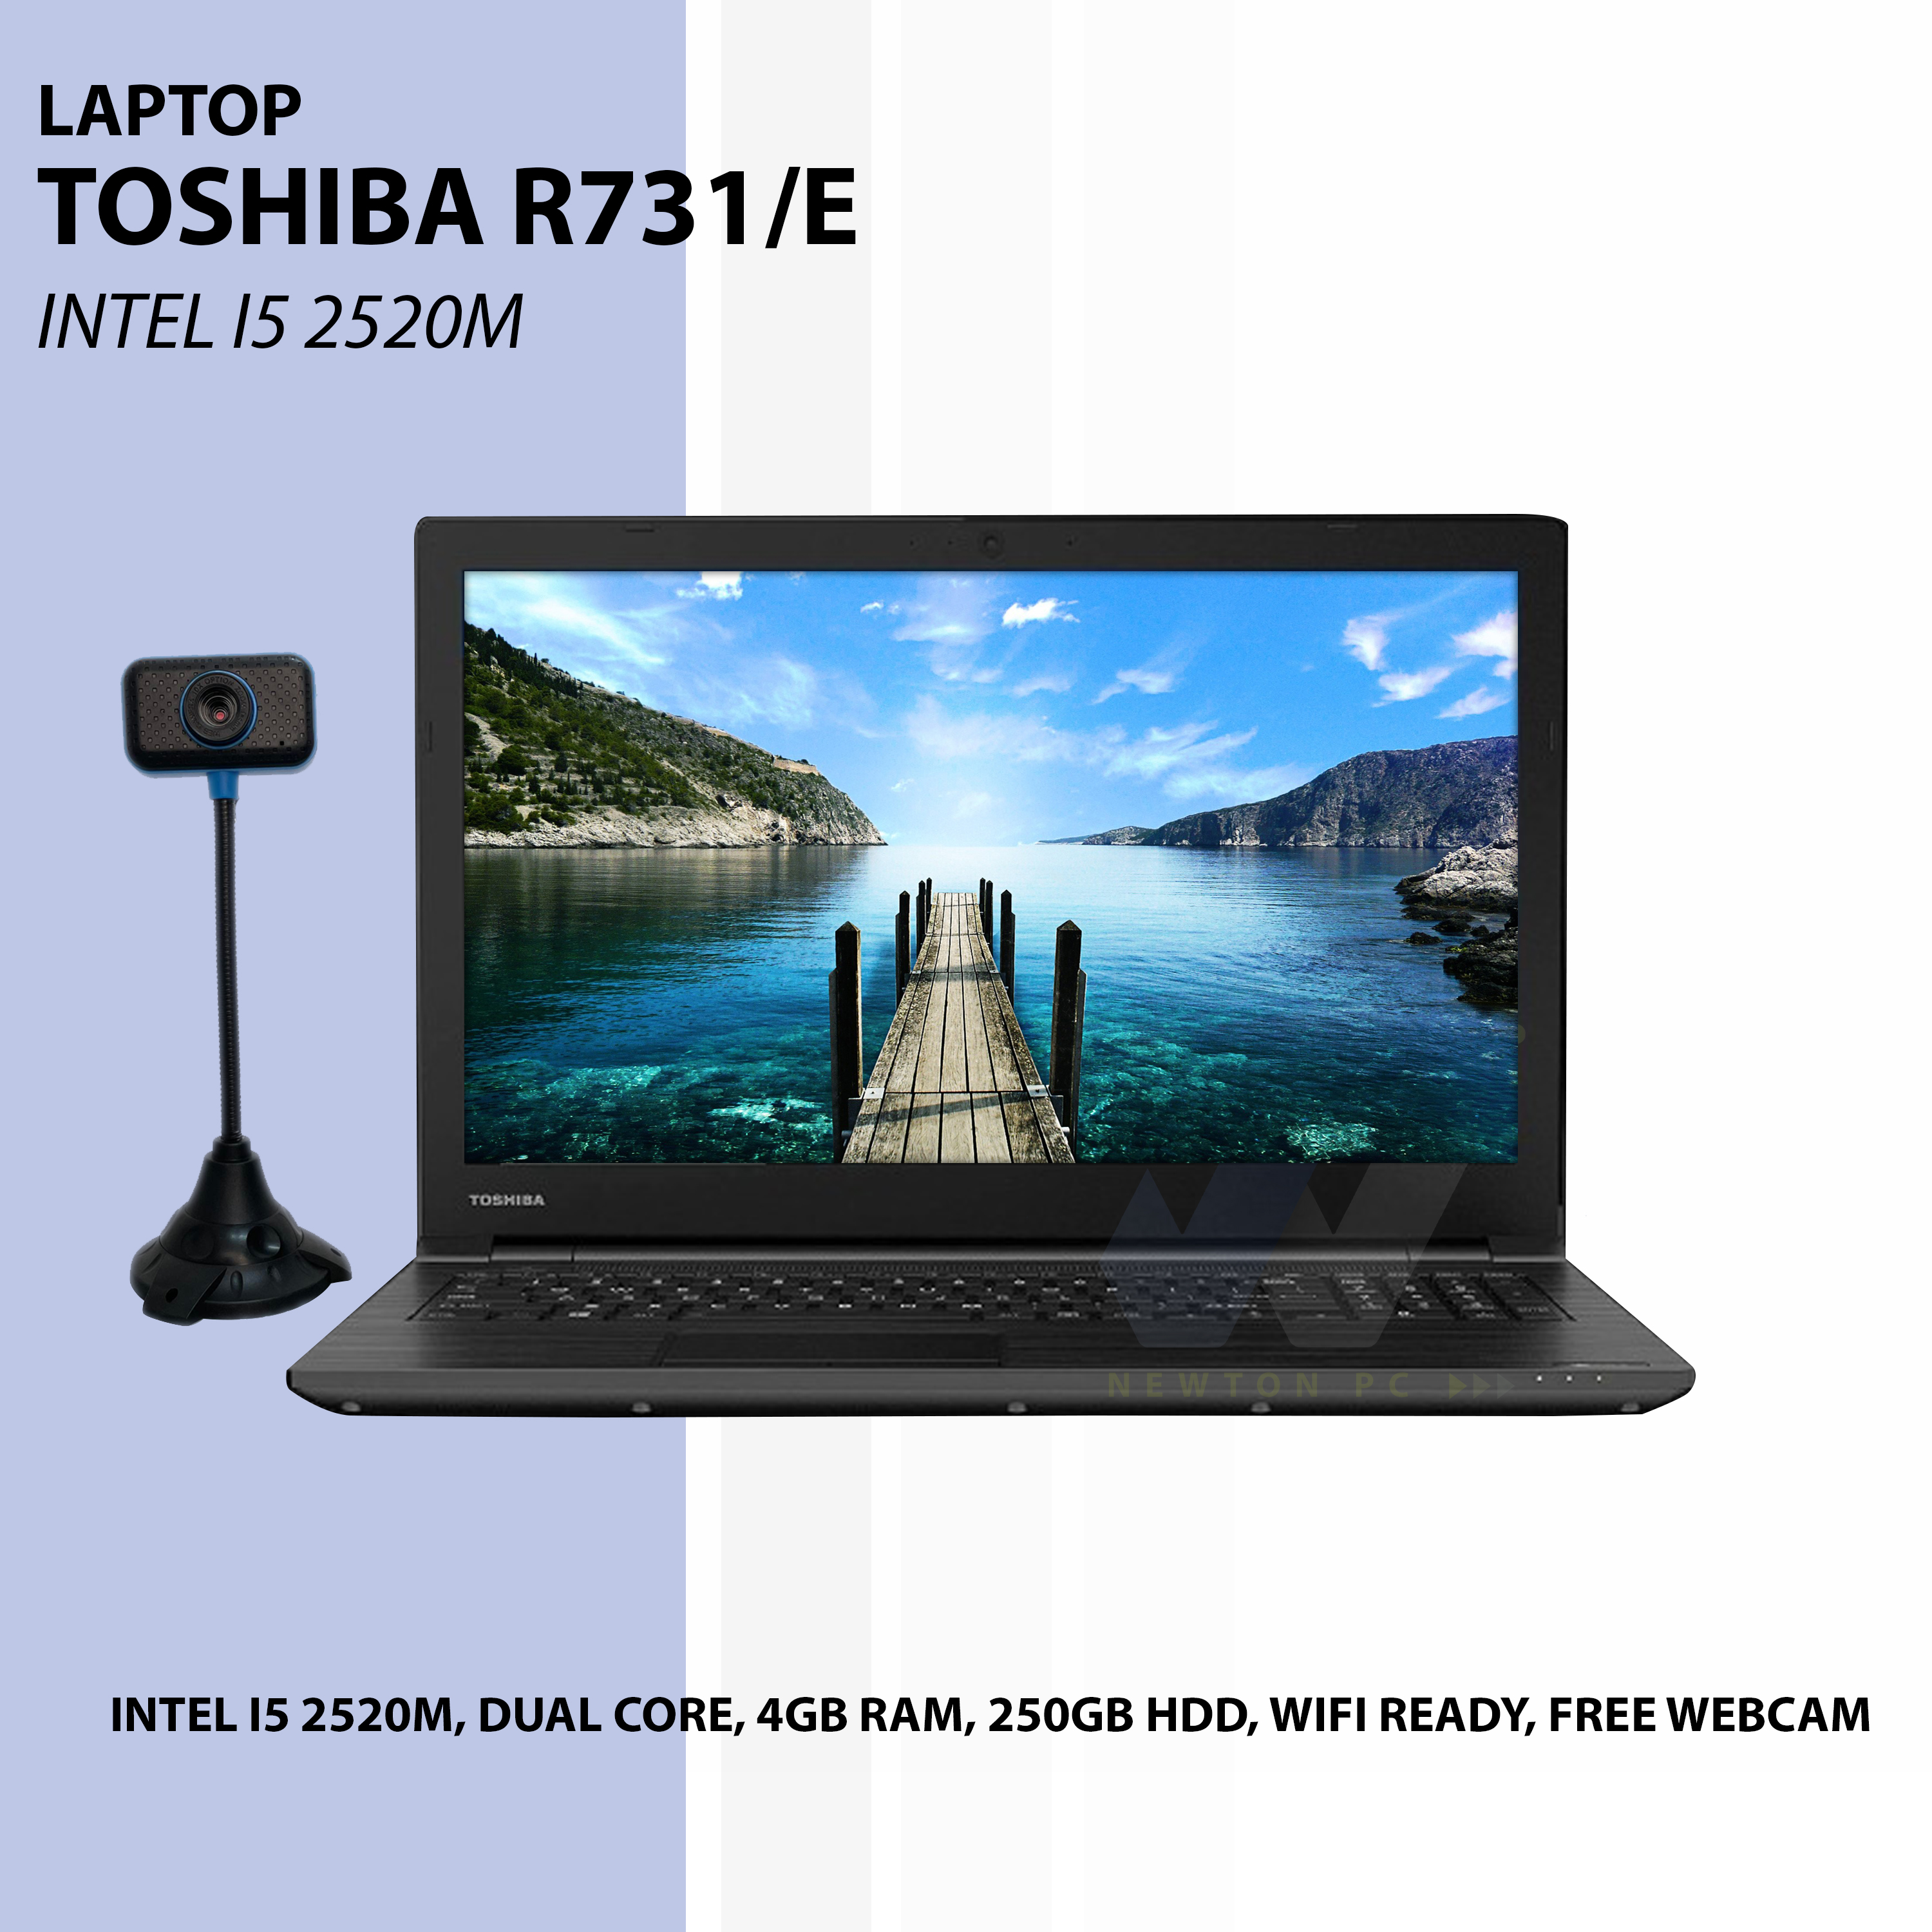 Laptop ( Toshiba Dynabook R731/E , Intel Core i5 2520m 2nd Gen , Dual Core  2.5Ghz, 4GB Ram DDR3, 250GB HDD ) Wifi and Windows Ready / Free Webcam , 